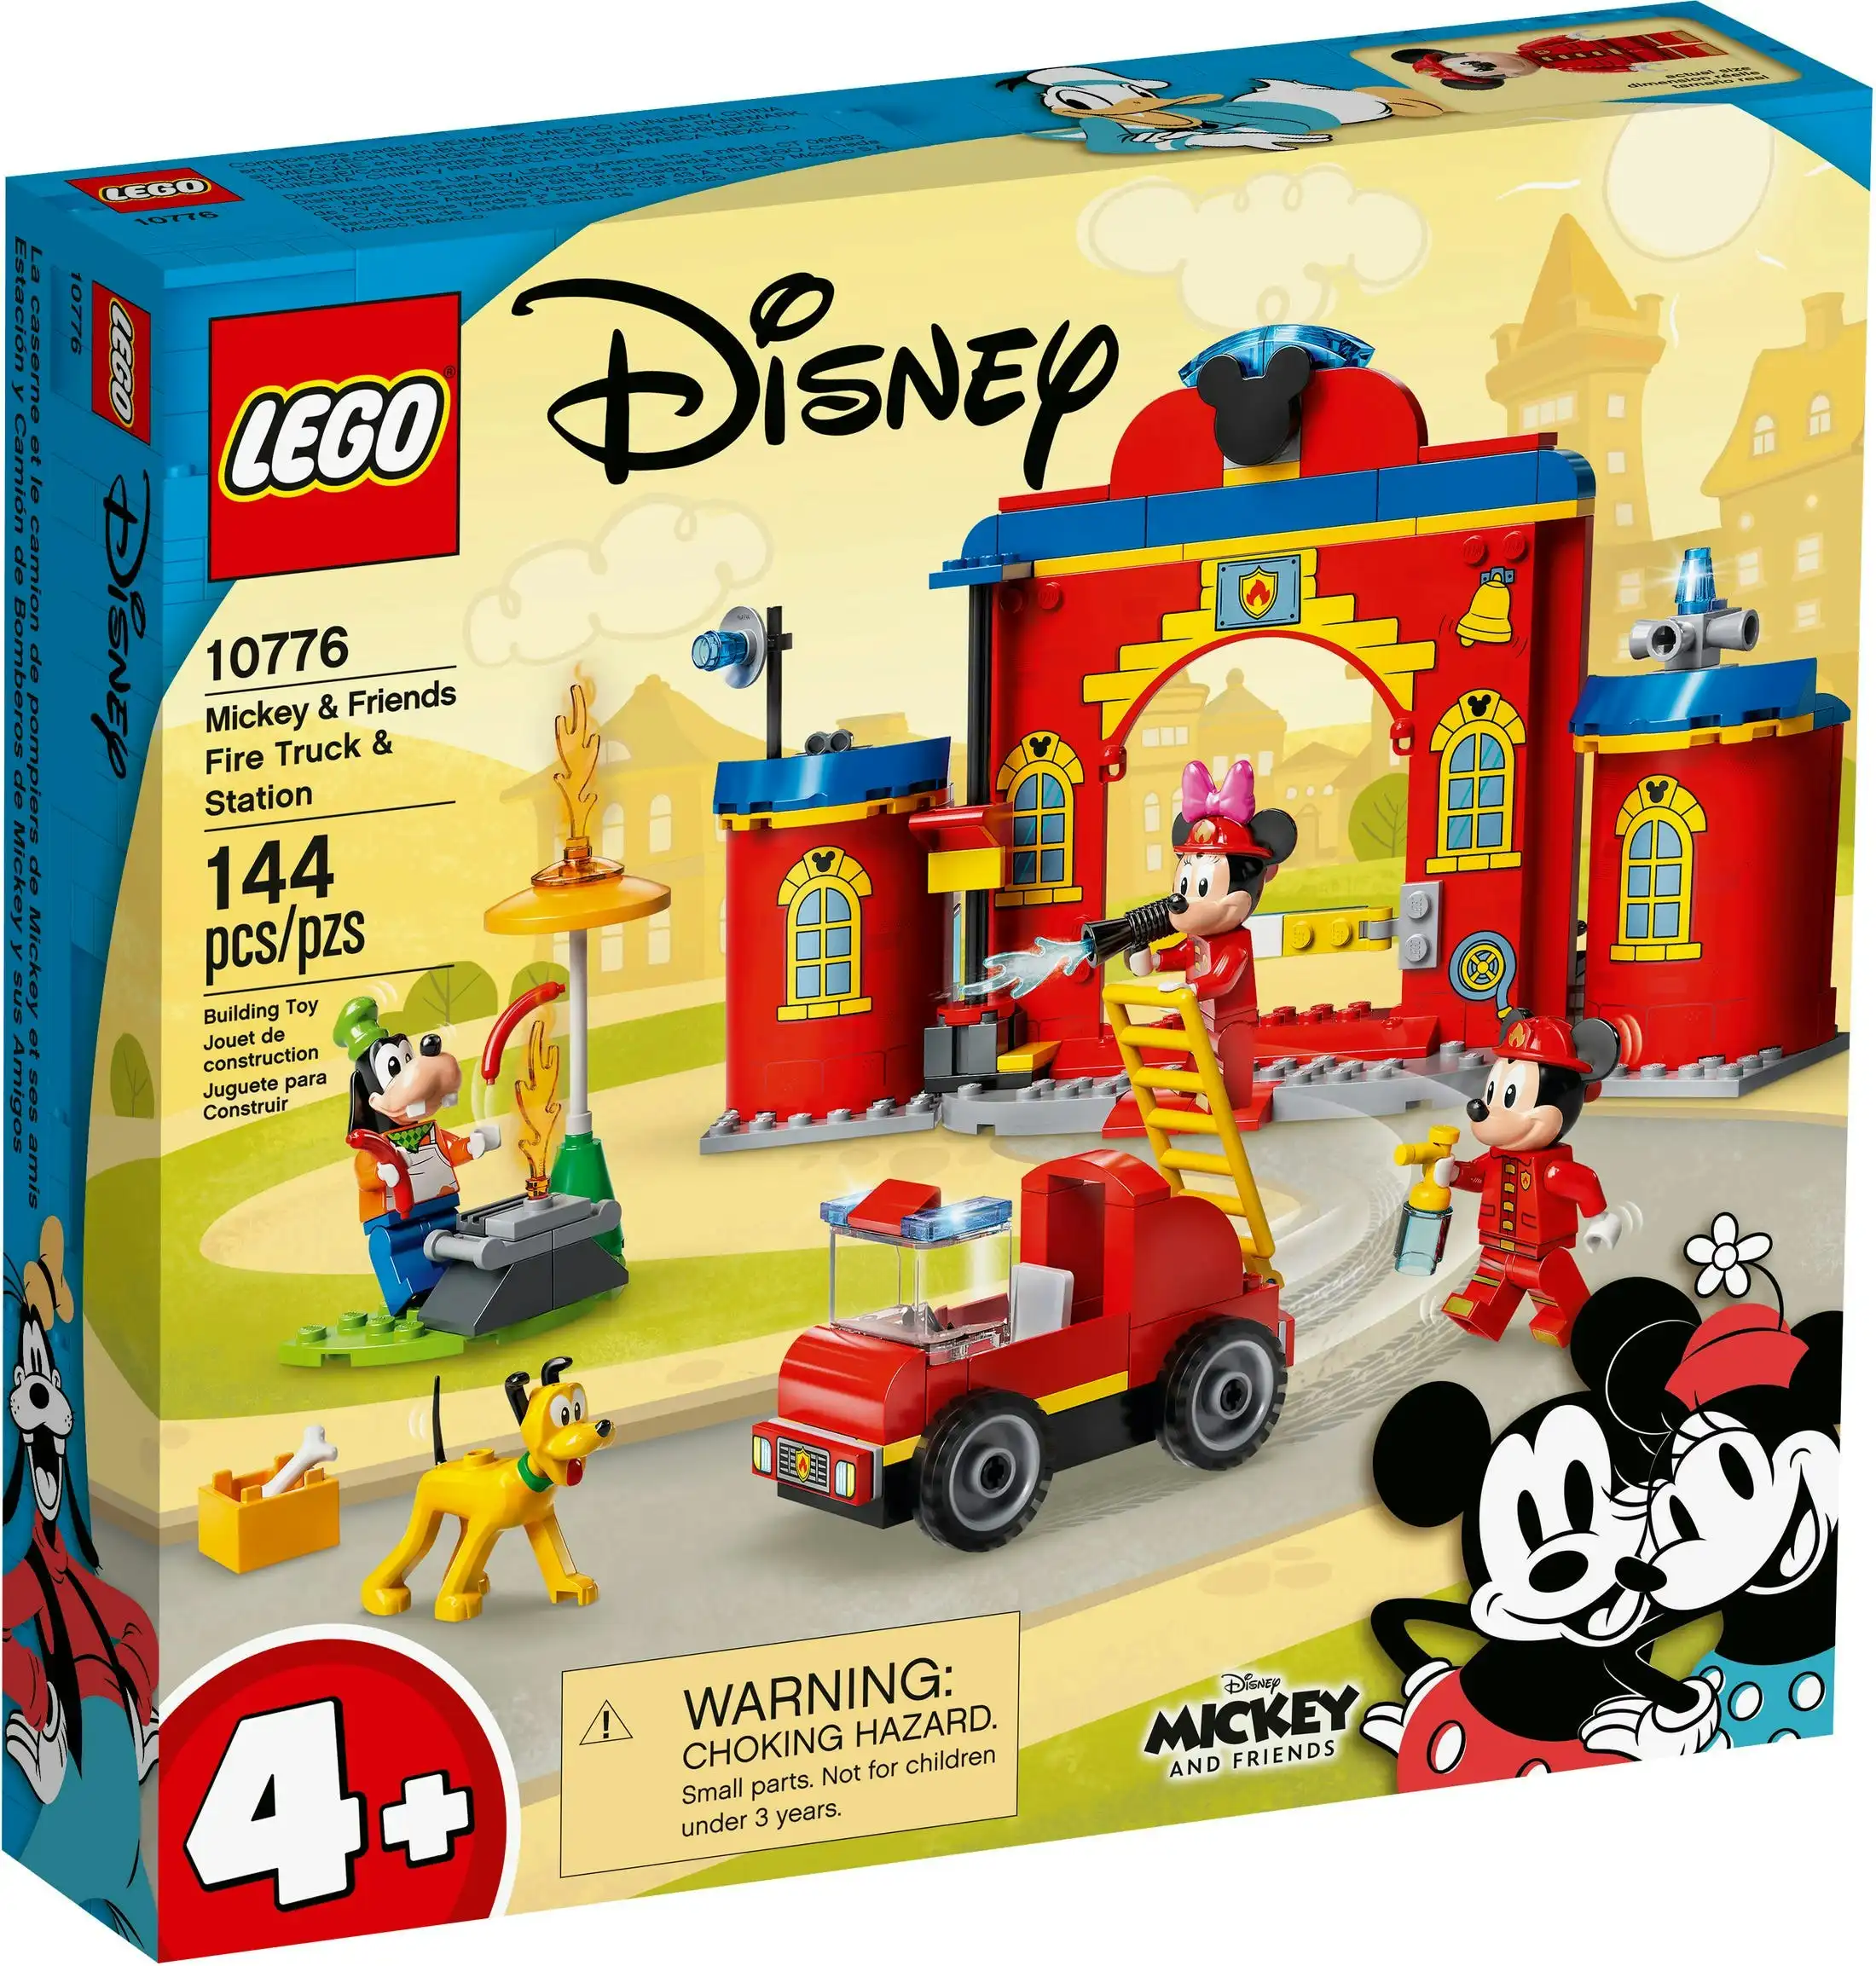 LEGO 10776 Mickey & Friends Fire Truck & Station - Disney Mickey And Friends 4+